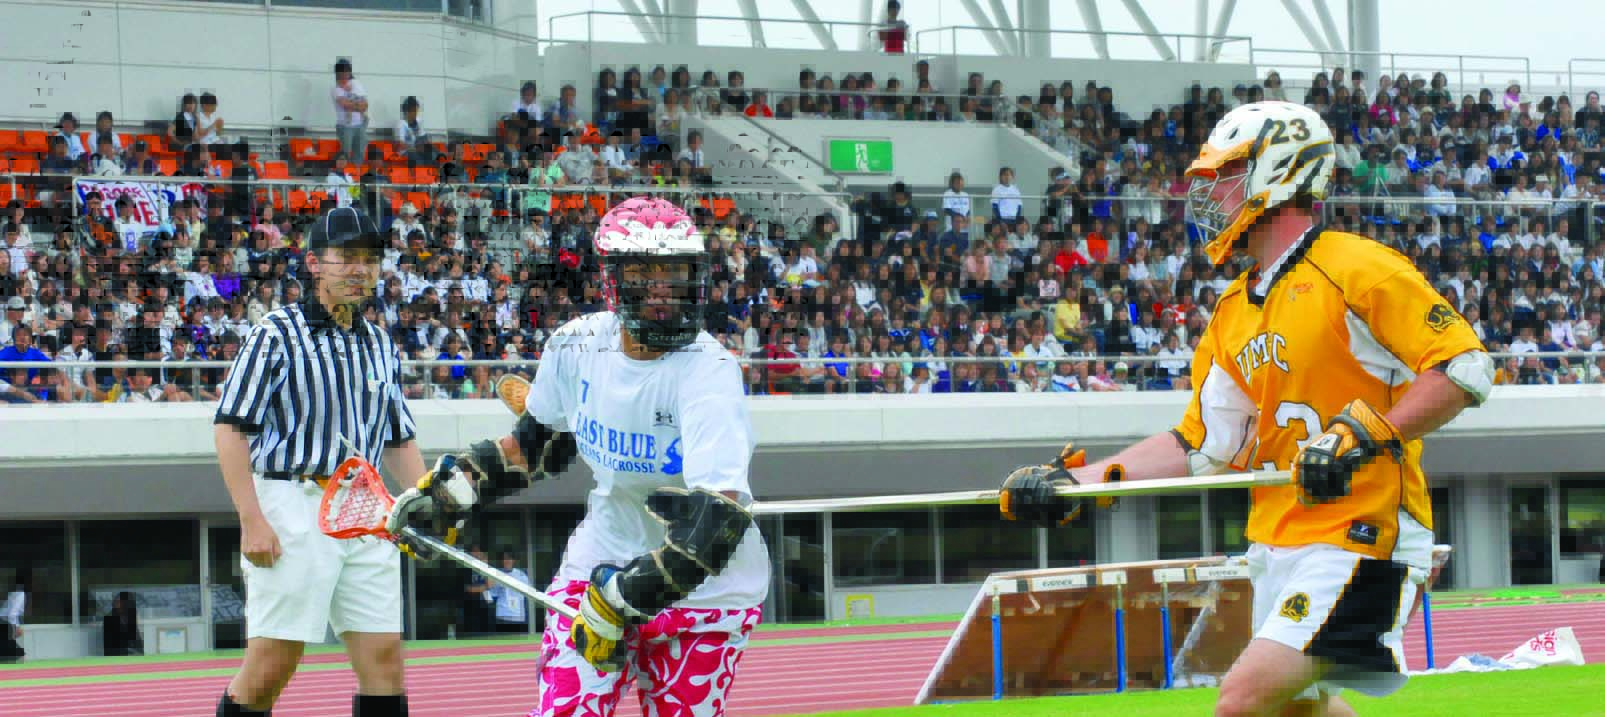 UMBC lacrosse plays Japan's East Blue team